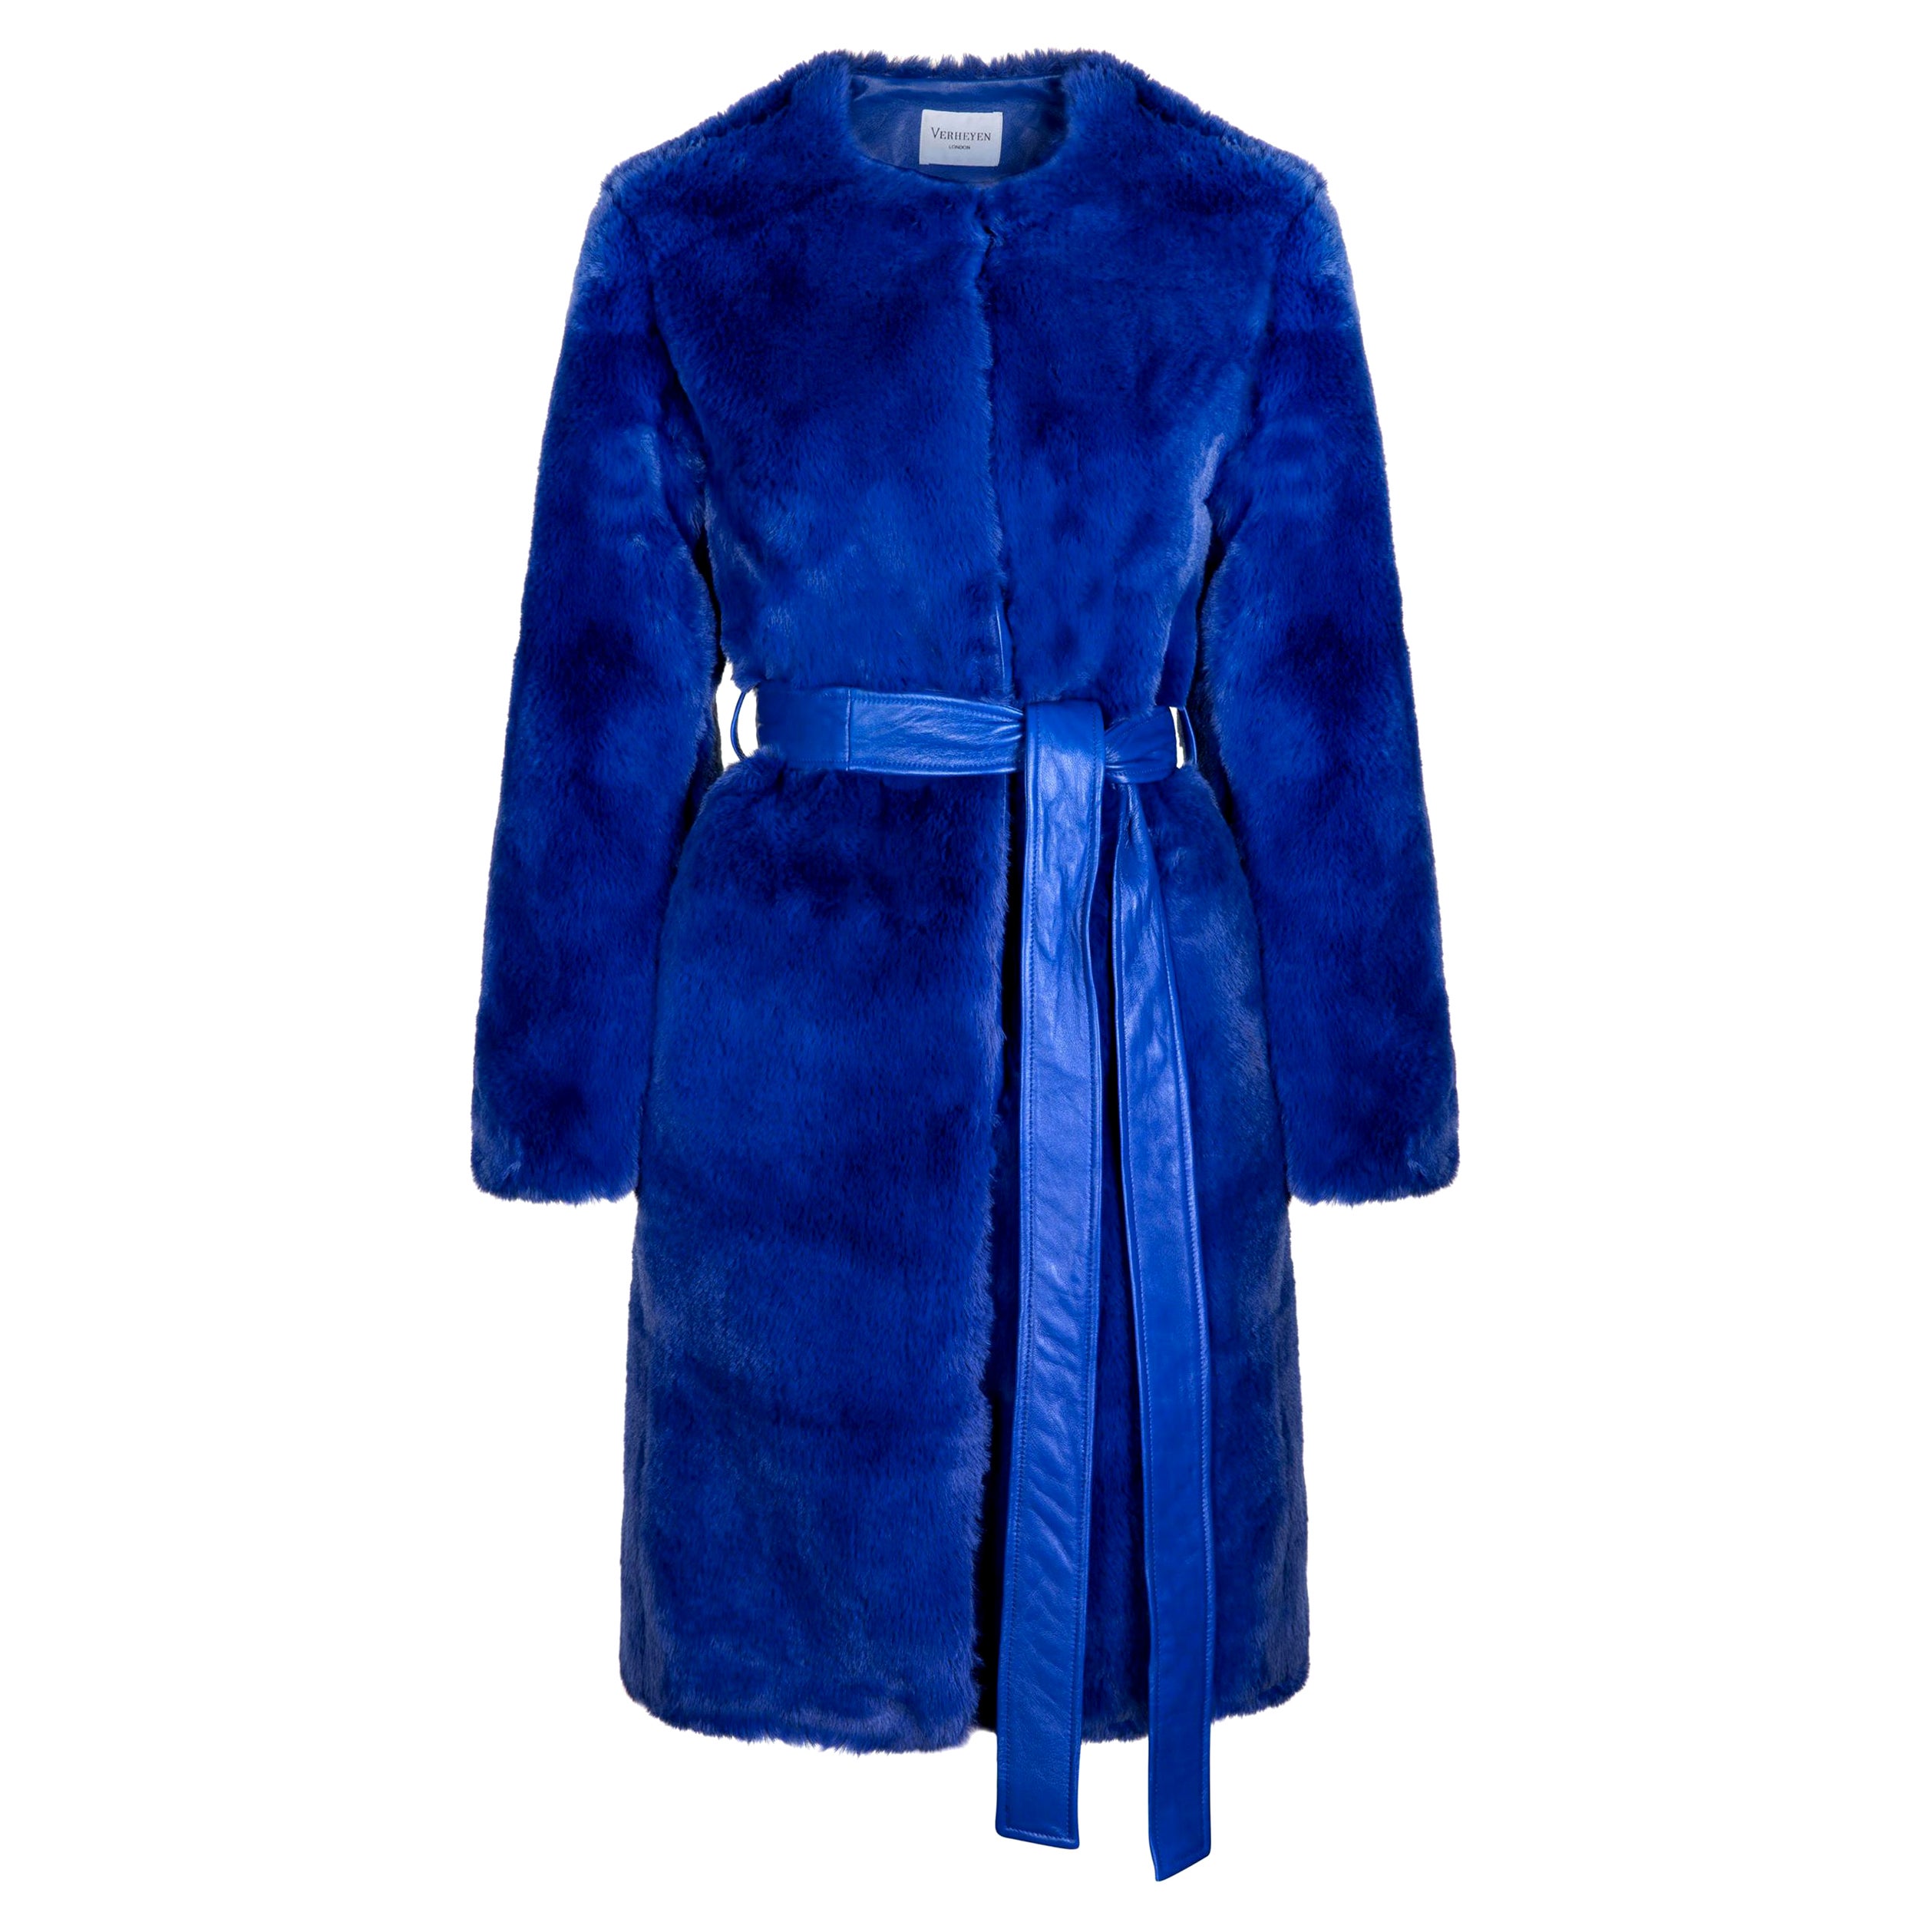 Verheyen London Serena  Collarless Faux Fur Coat in Blue - Size uk 12  For Sale